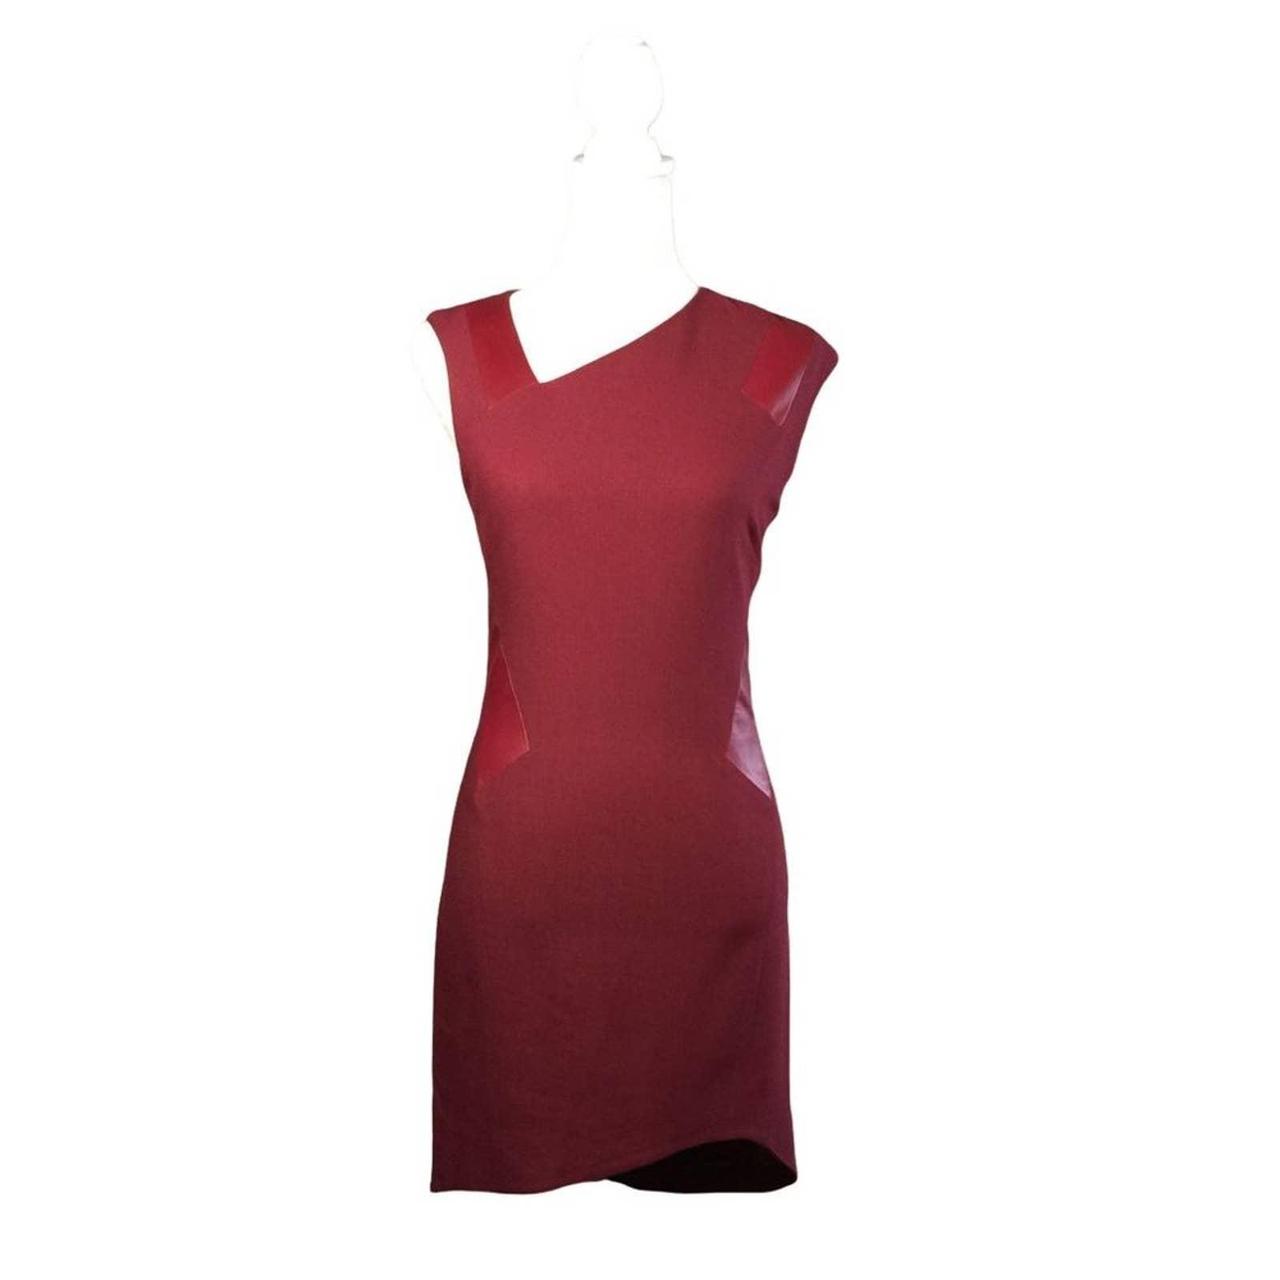 Product Image 1 - HELMUT LANG pxl dress burgundy